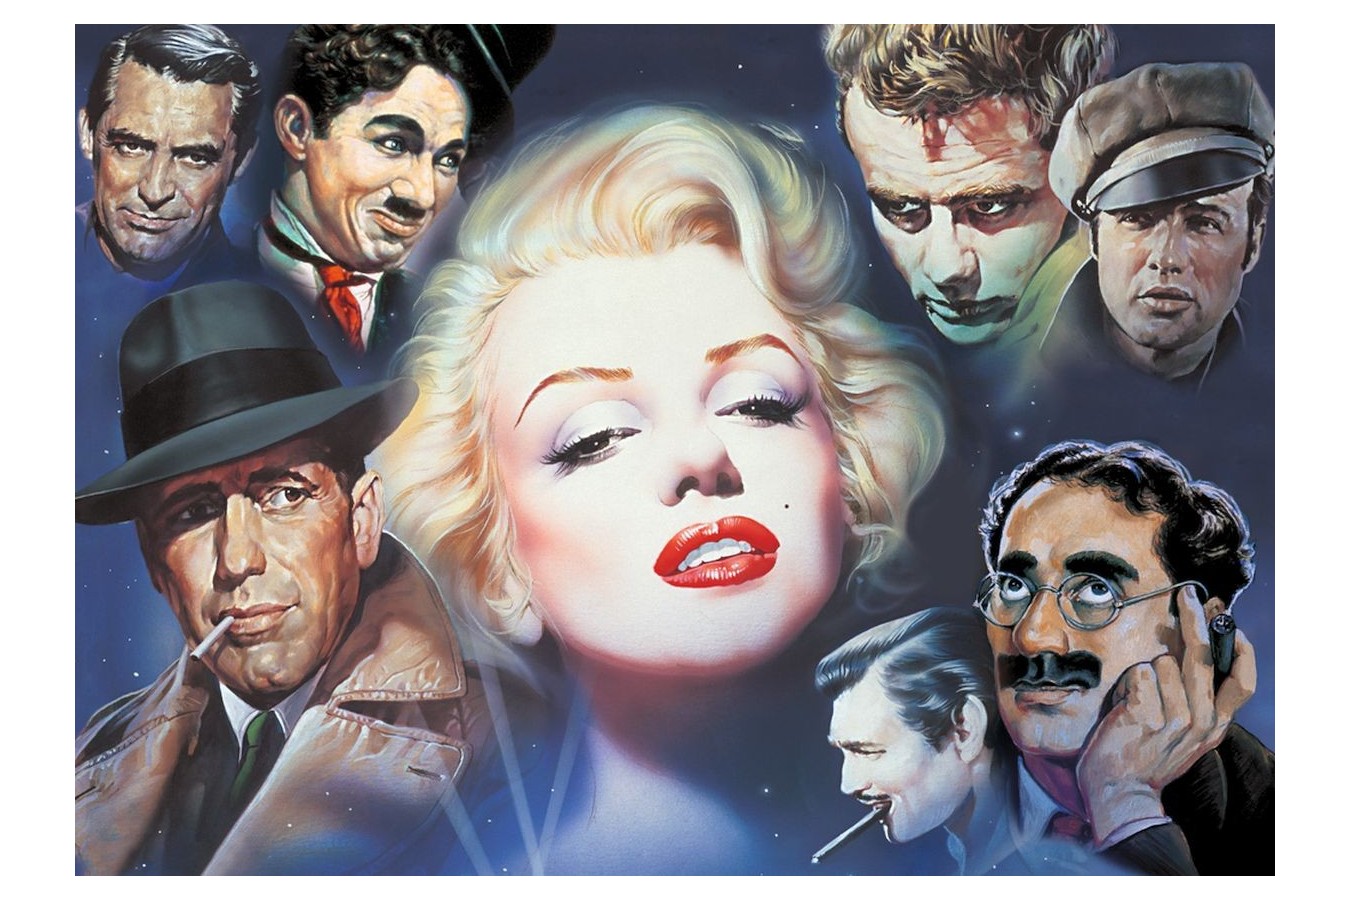 Puzzle Schmidt - Renato Casaro: Marilyn Monroe si prietenii, 1000 piese (57550)